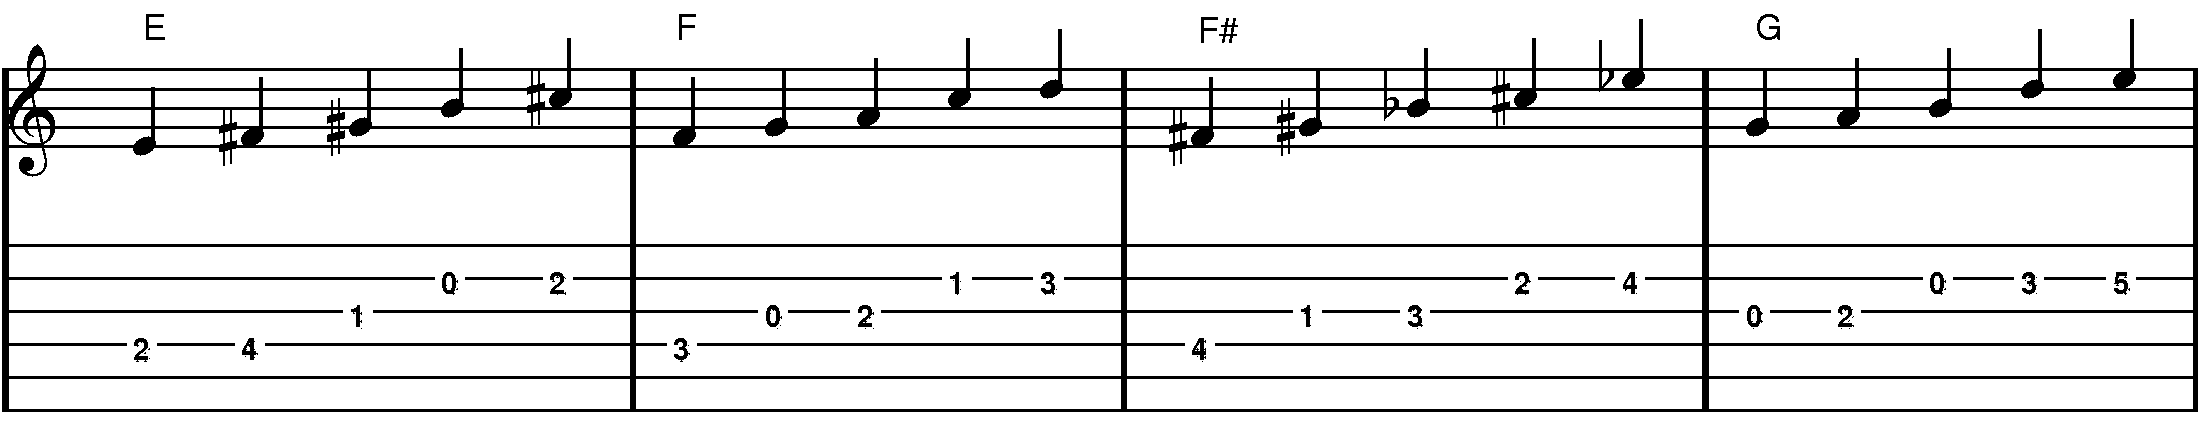 Major Pentatonic Scales Guitar in standard tuning E-G